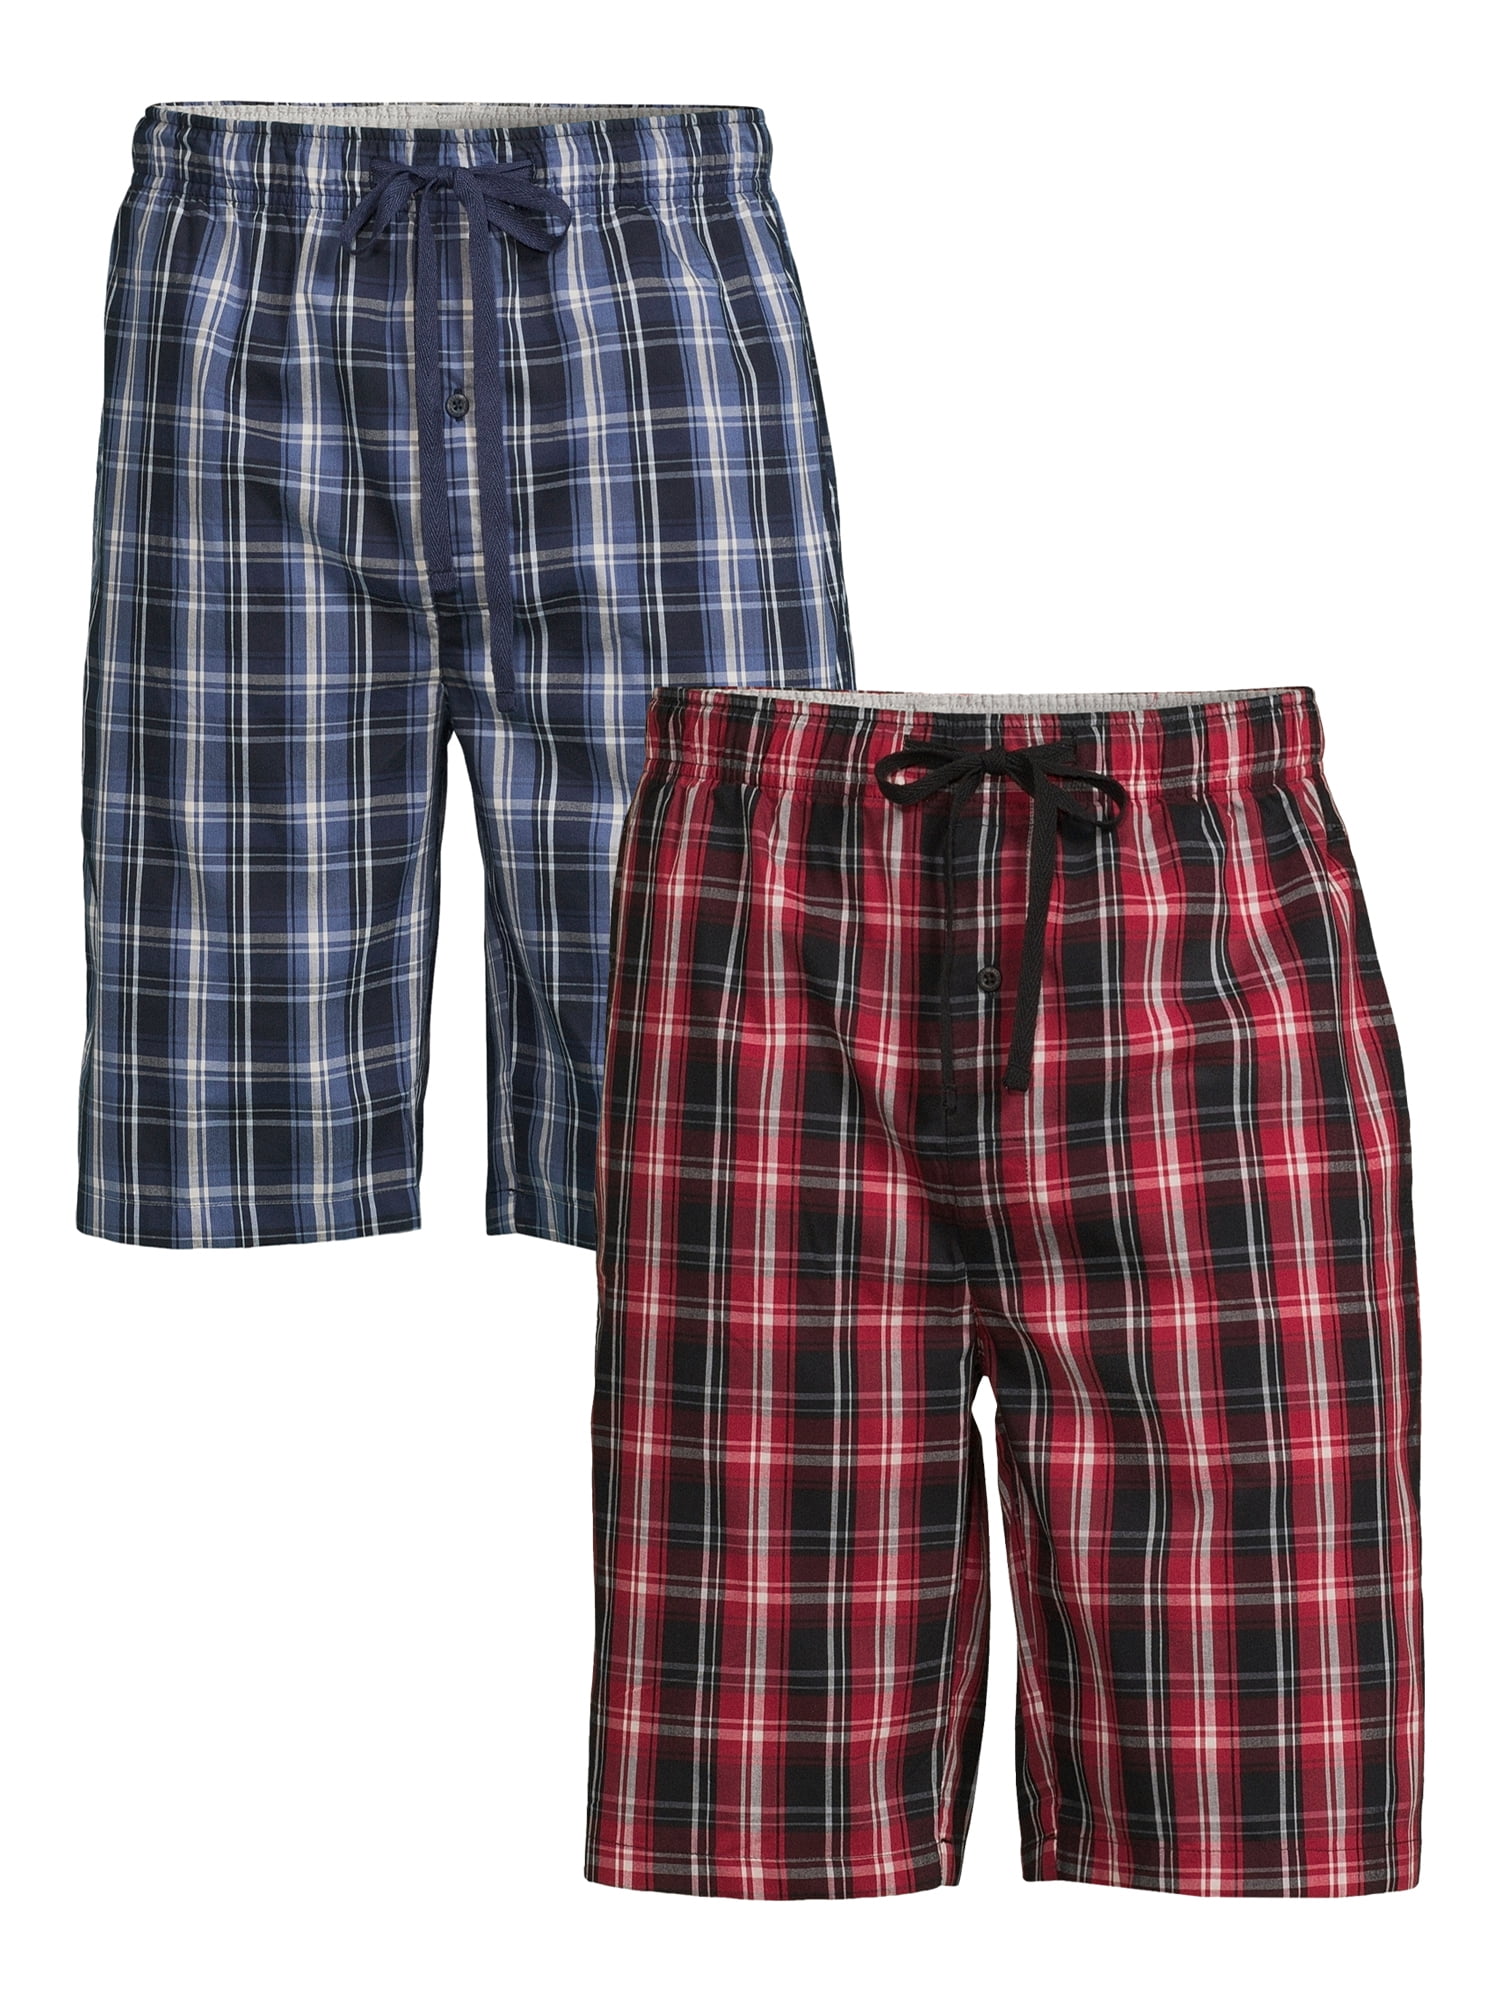 Men's Lounge Pajama Sleep Shorts/Woven Jam Dorm Shorts Drawstring & Pockets 3 Pack 